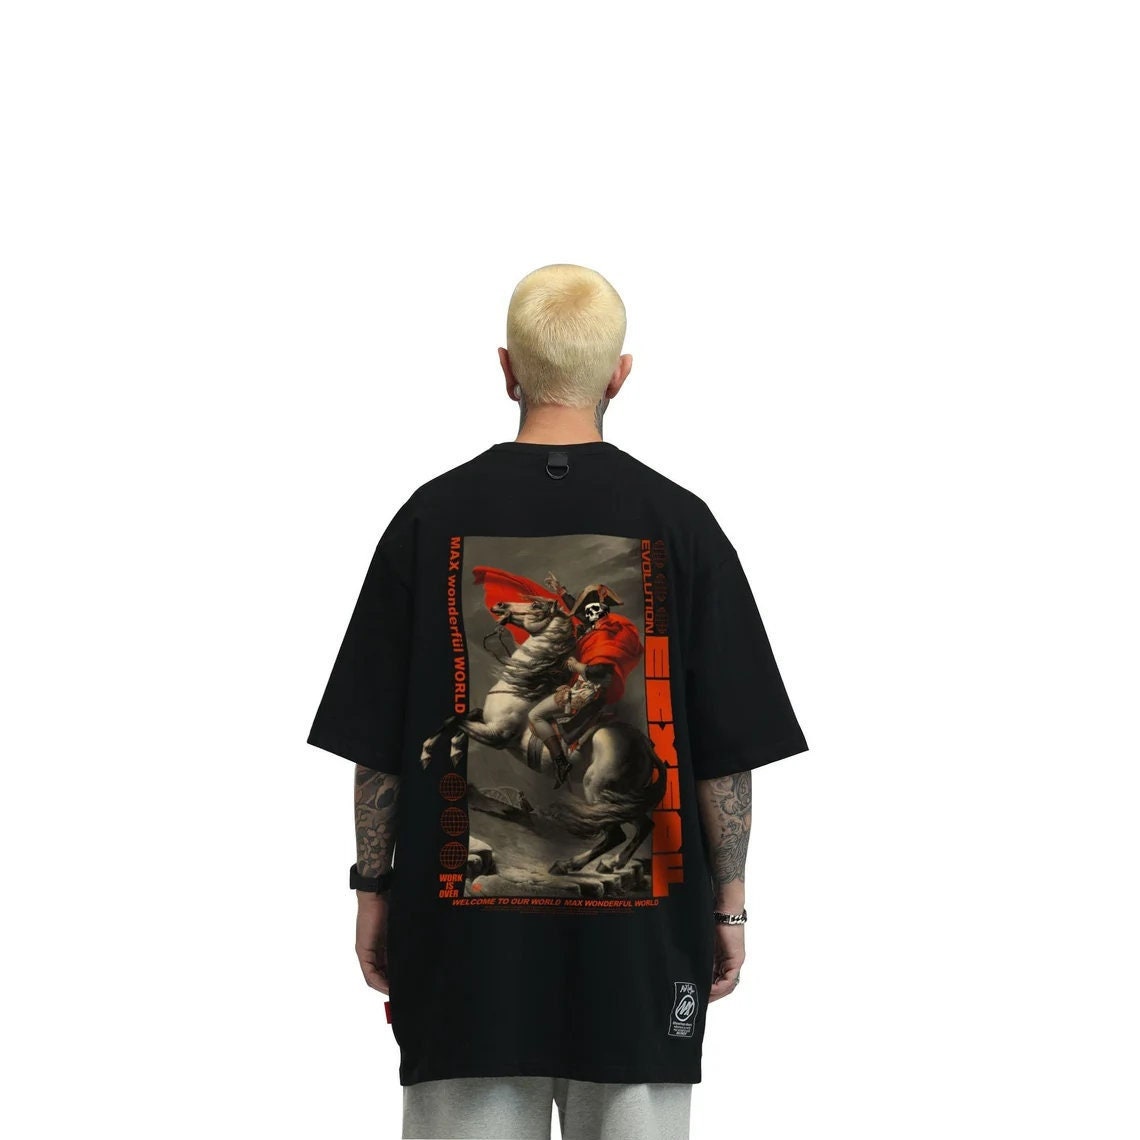 Streetwear Retro Oil Painting Artwork Printed Tee Shirt Urban Fashion Summer Cotton Short Sleeves Graphic T Shirt